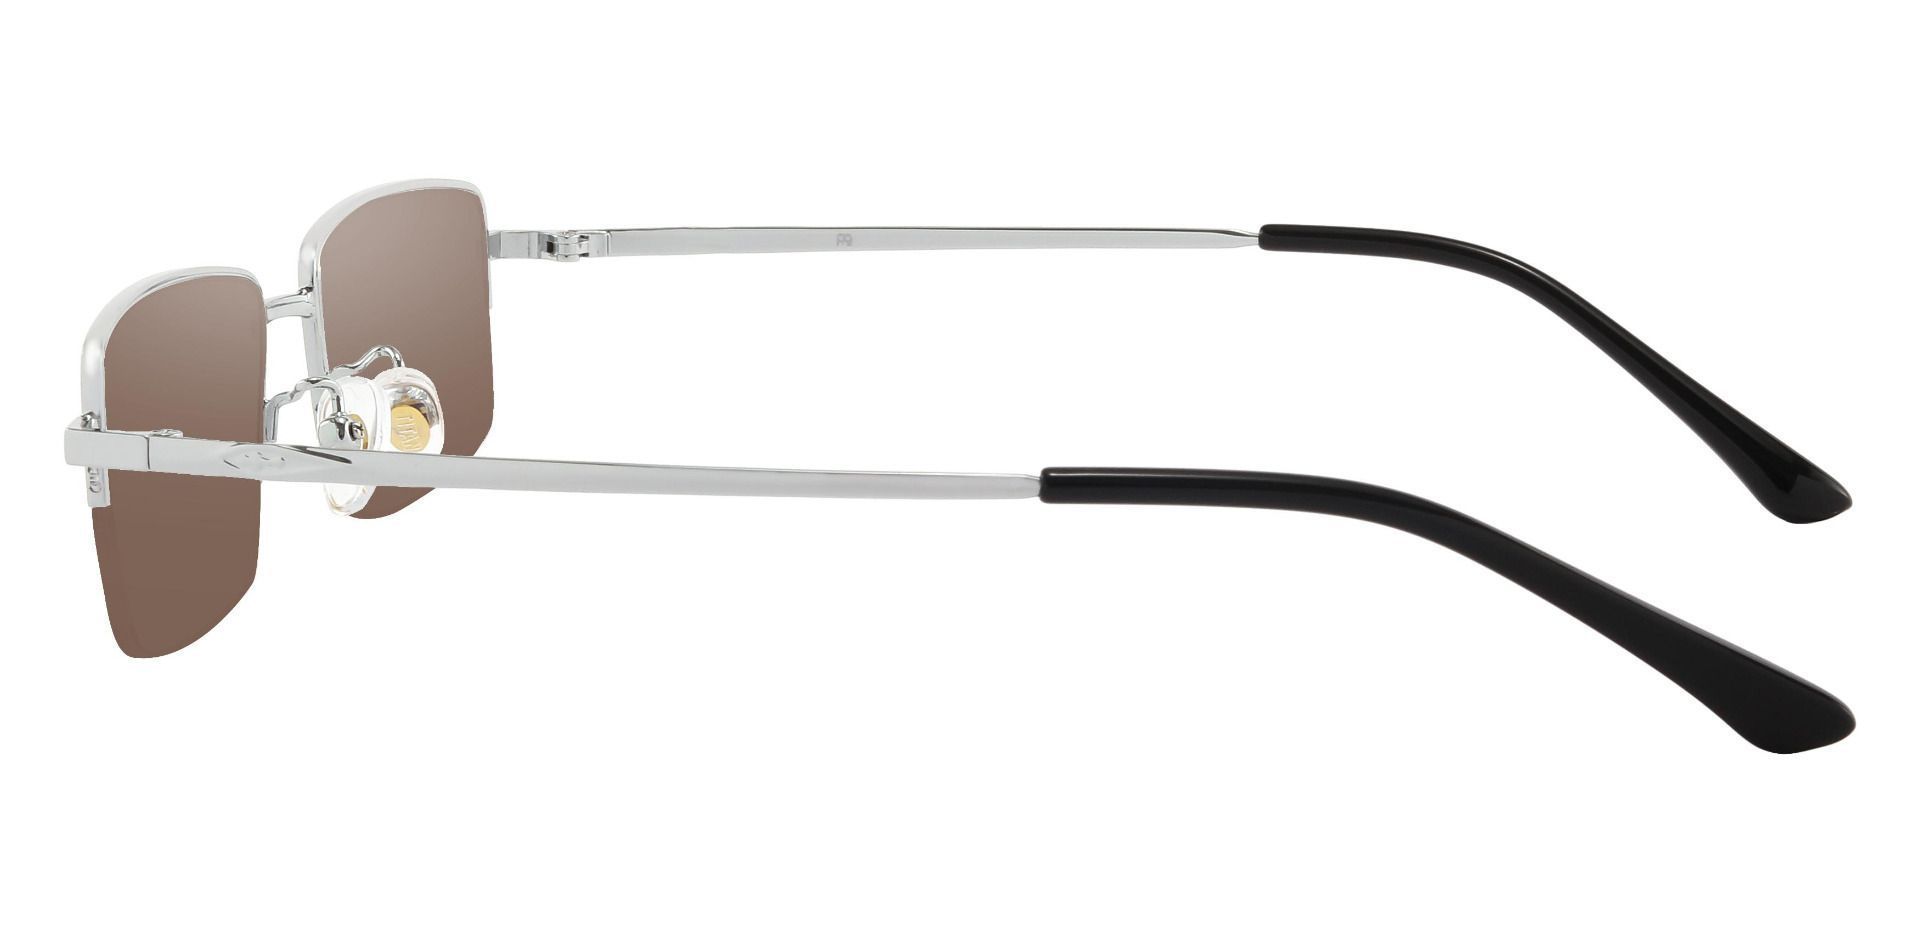 Waldo Rectangle Progressive Sunglasses - Silver Frame With Brown Lenses